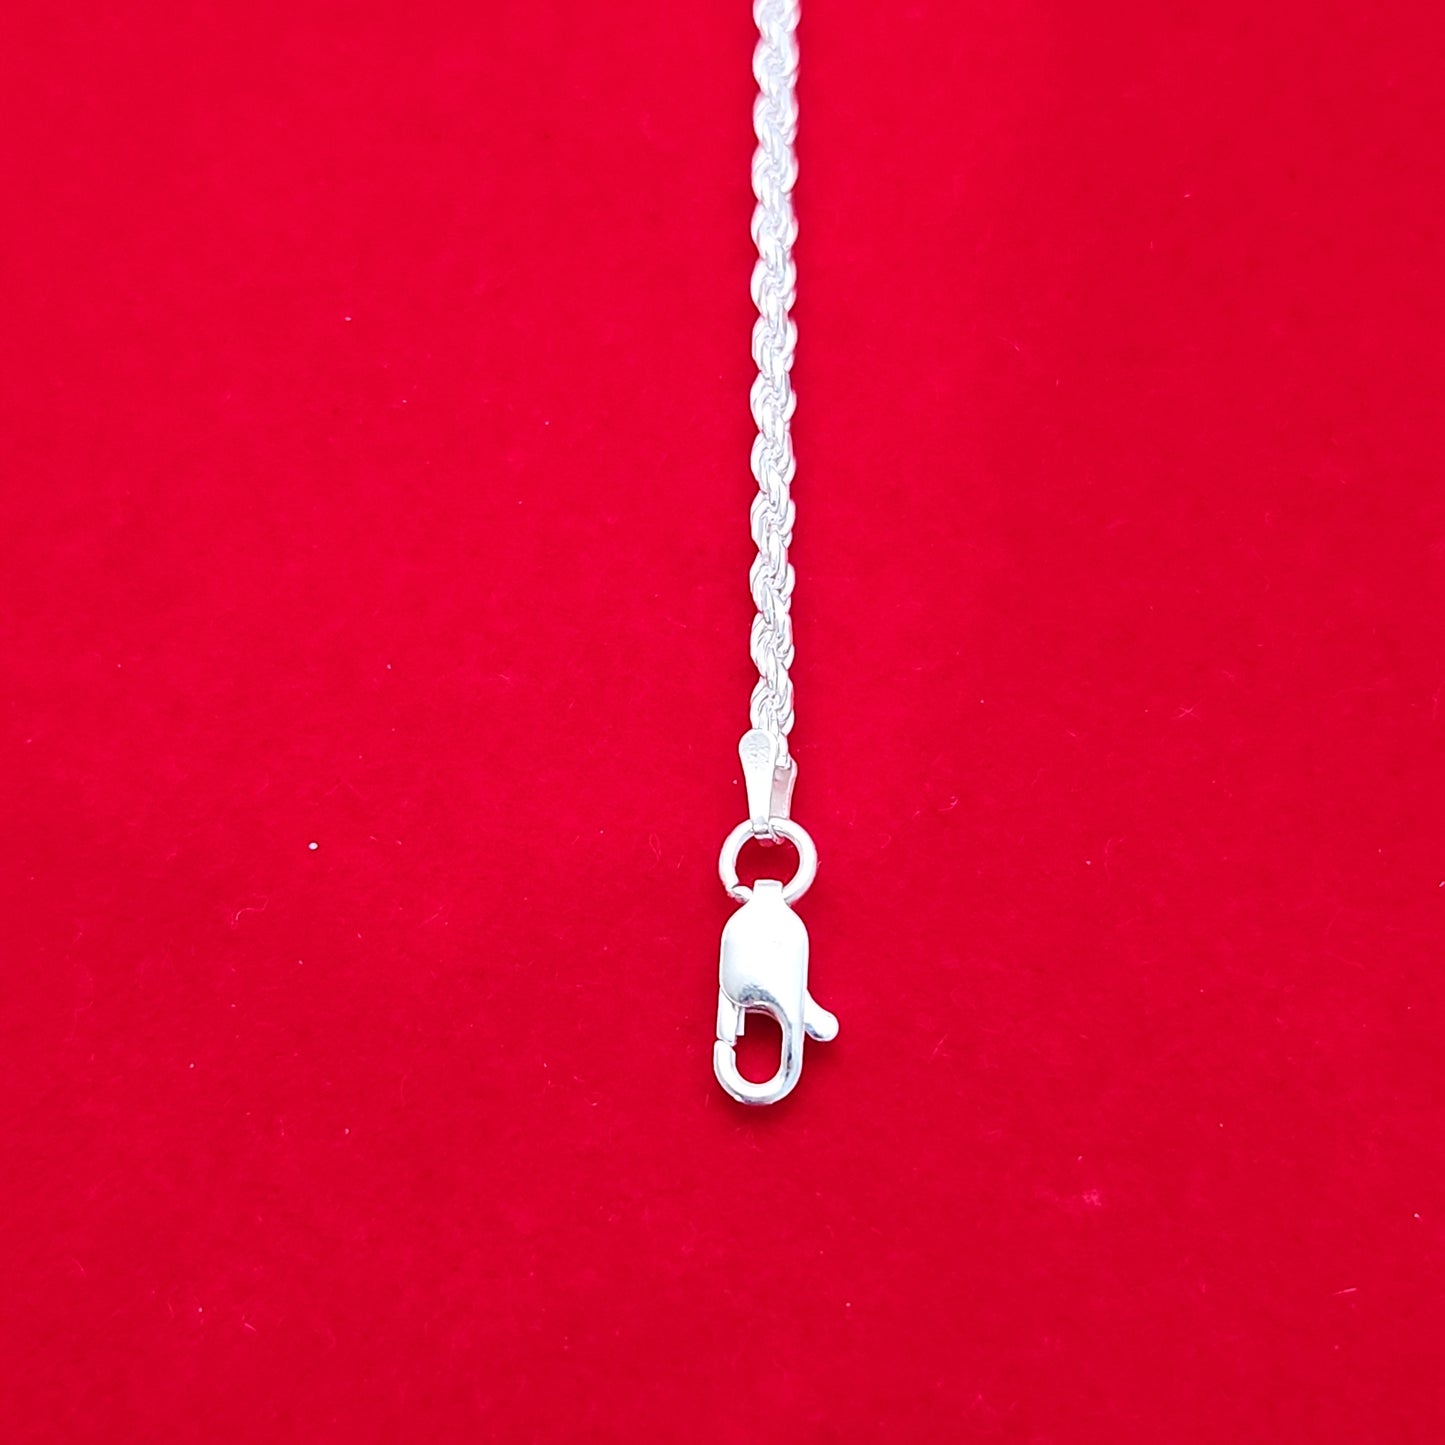 Diamond Cut Rope Bracelet 2mm